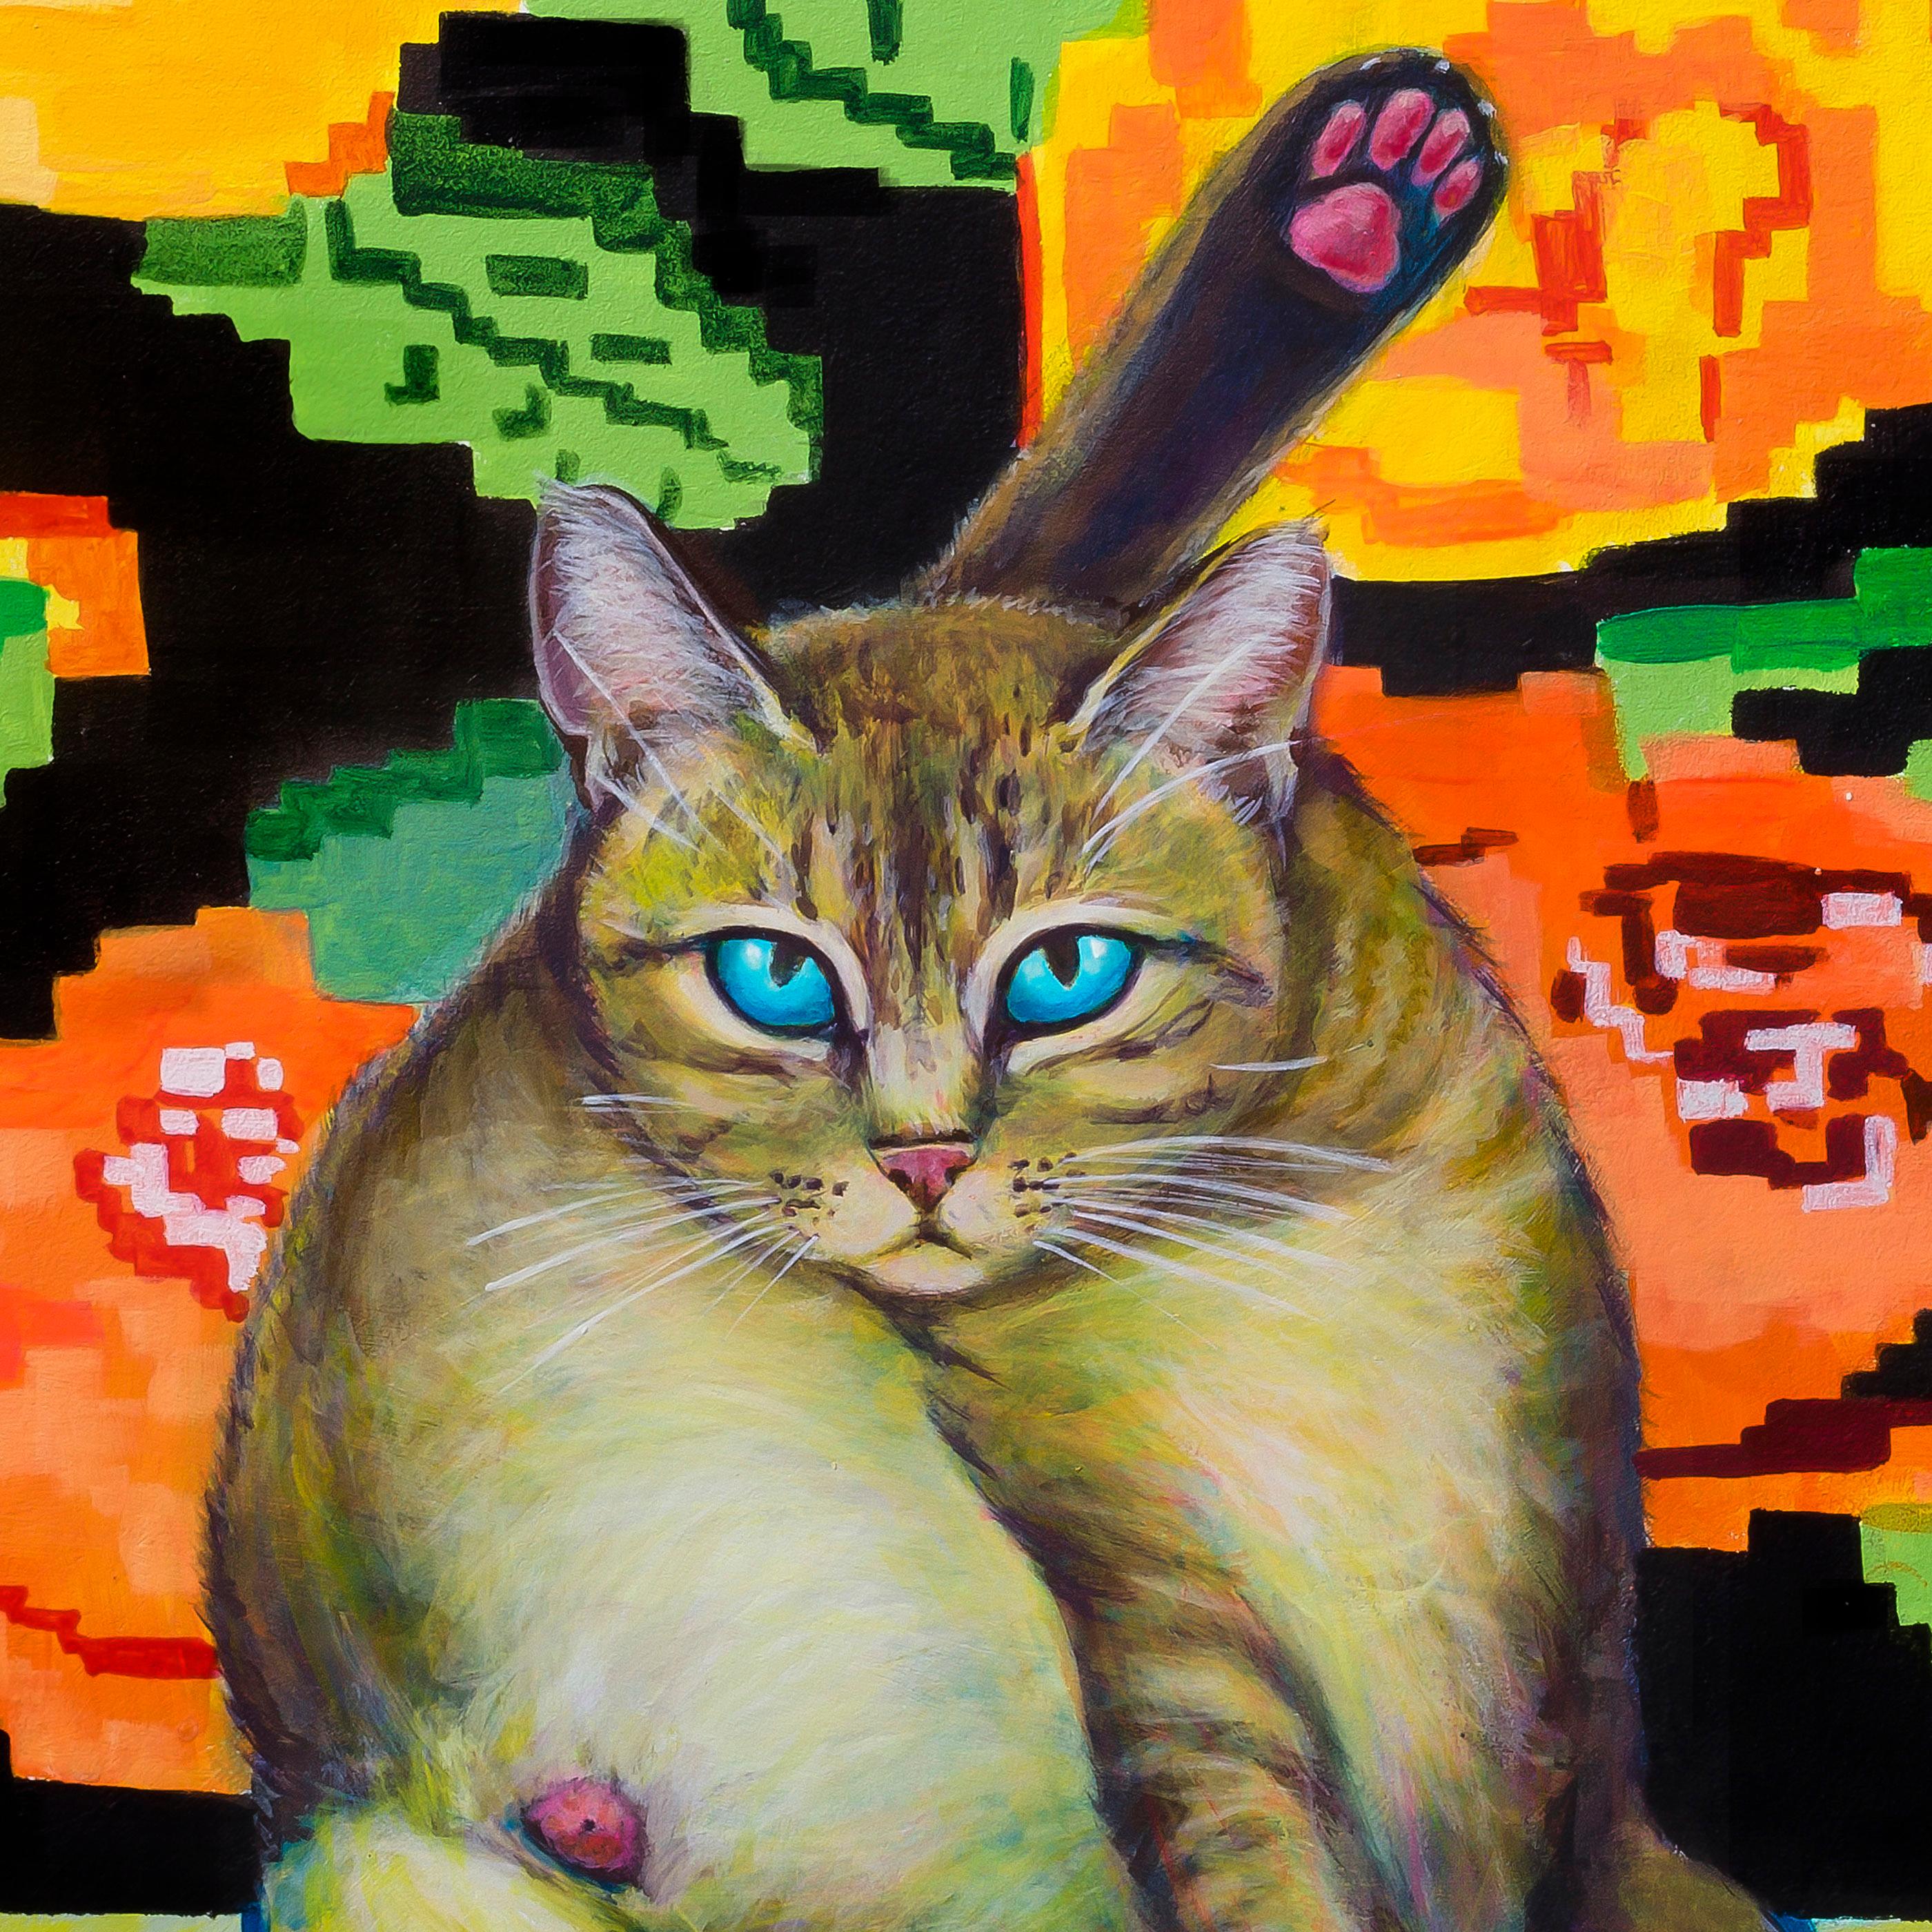 Large Colorful Cat Portrait With Still Life. Limited Edition 5/25 On Dibond - Print by Natasha Lelenco